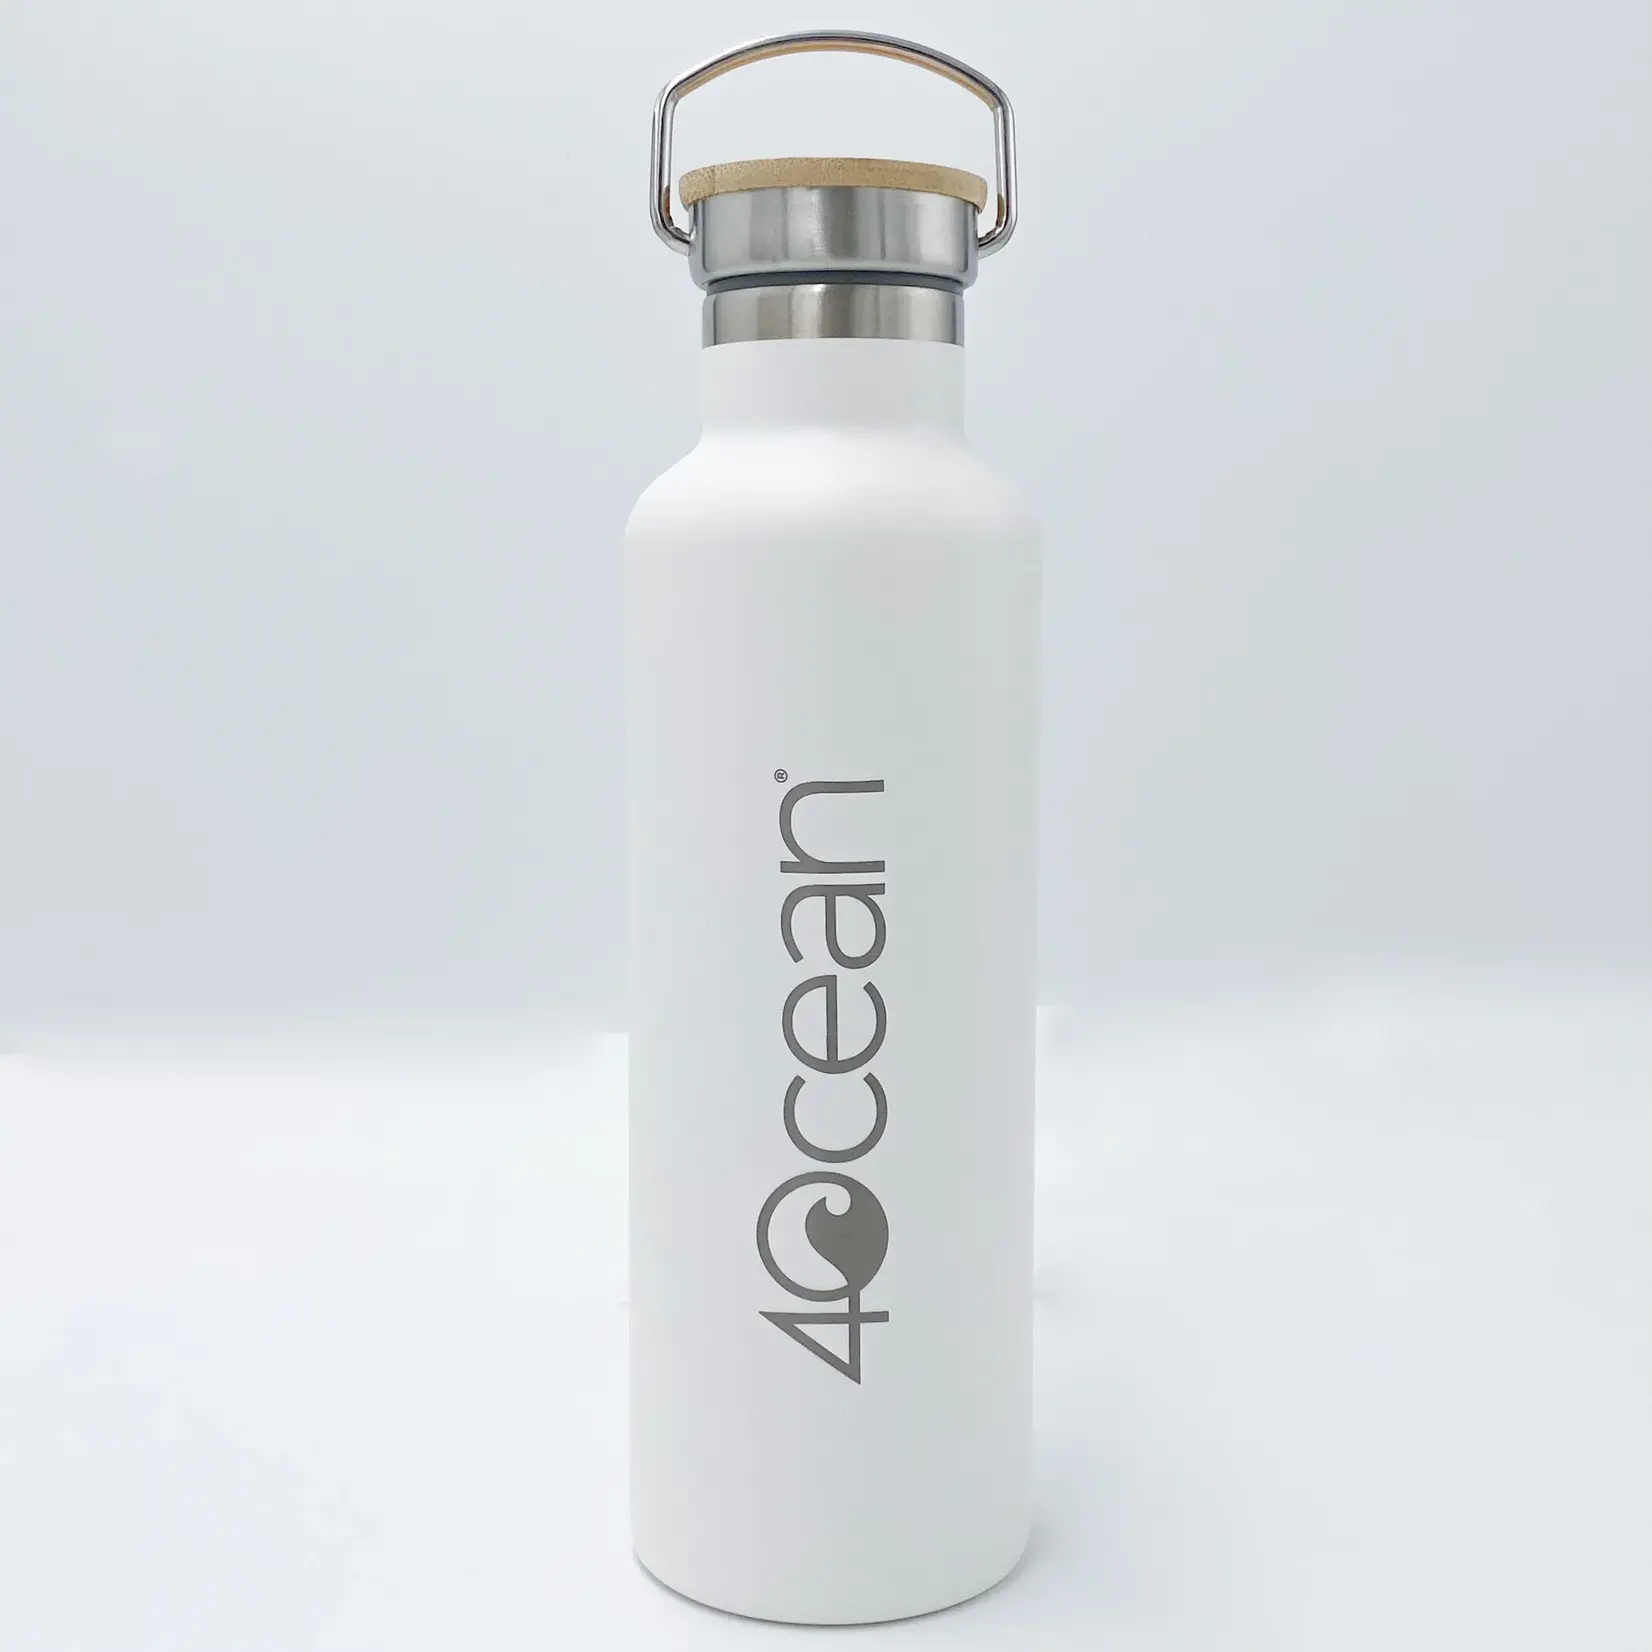 4Ocean 4Ocean water bottle